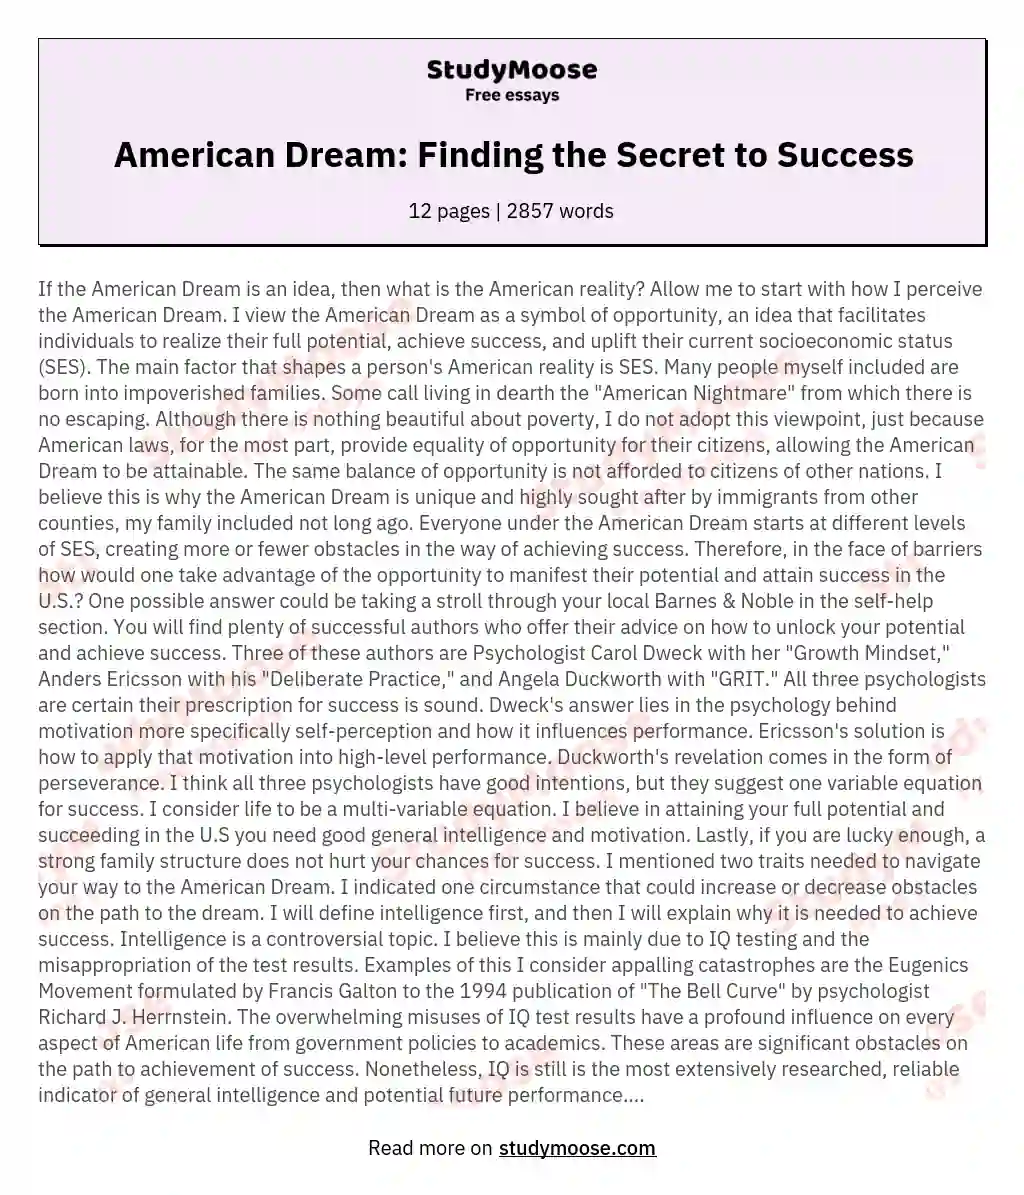 American Dream: Finding the Secret to Success essay